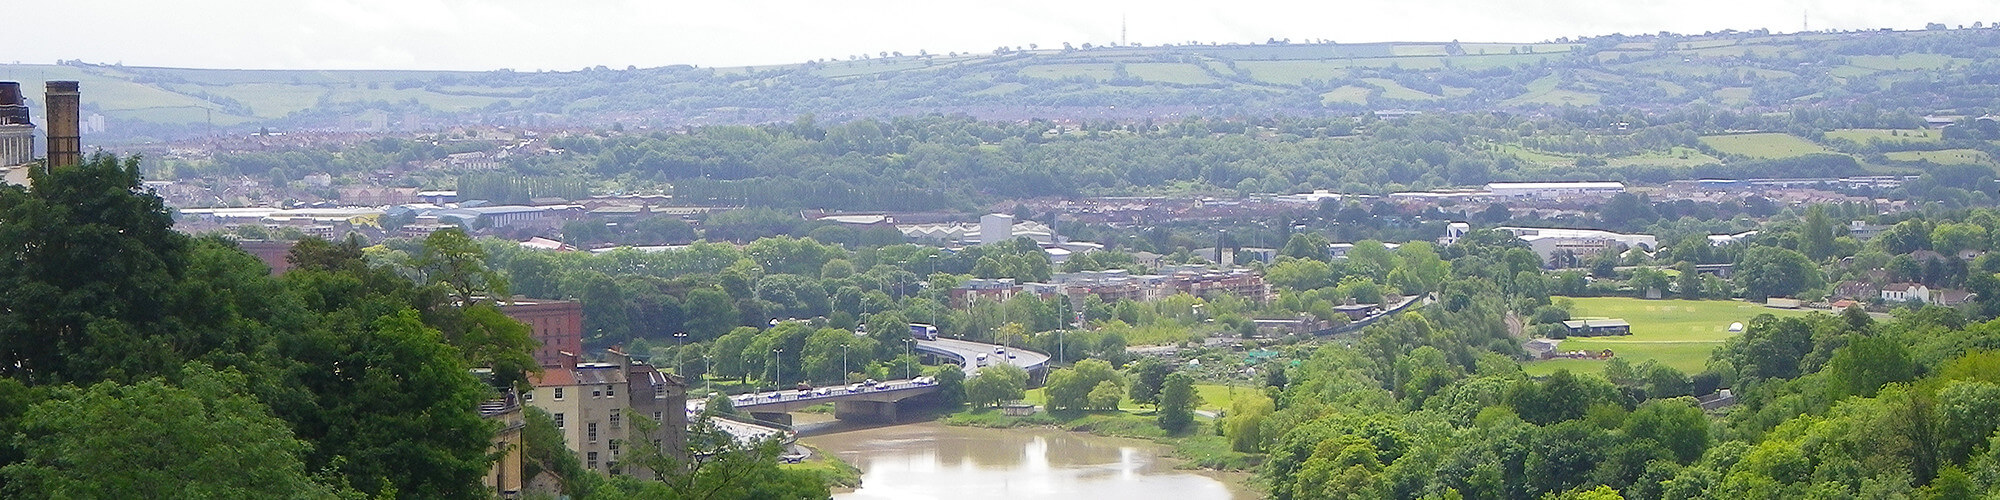 Stunning view across Bristol from the Suspension Bridge